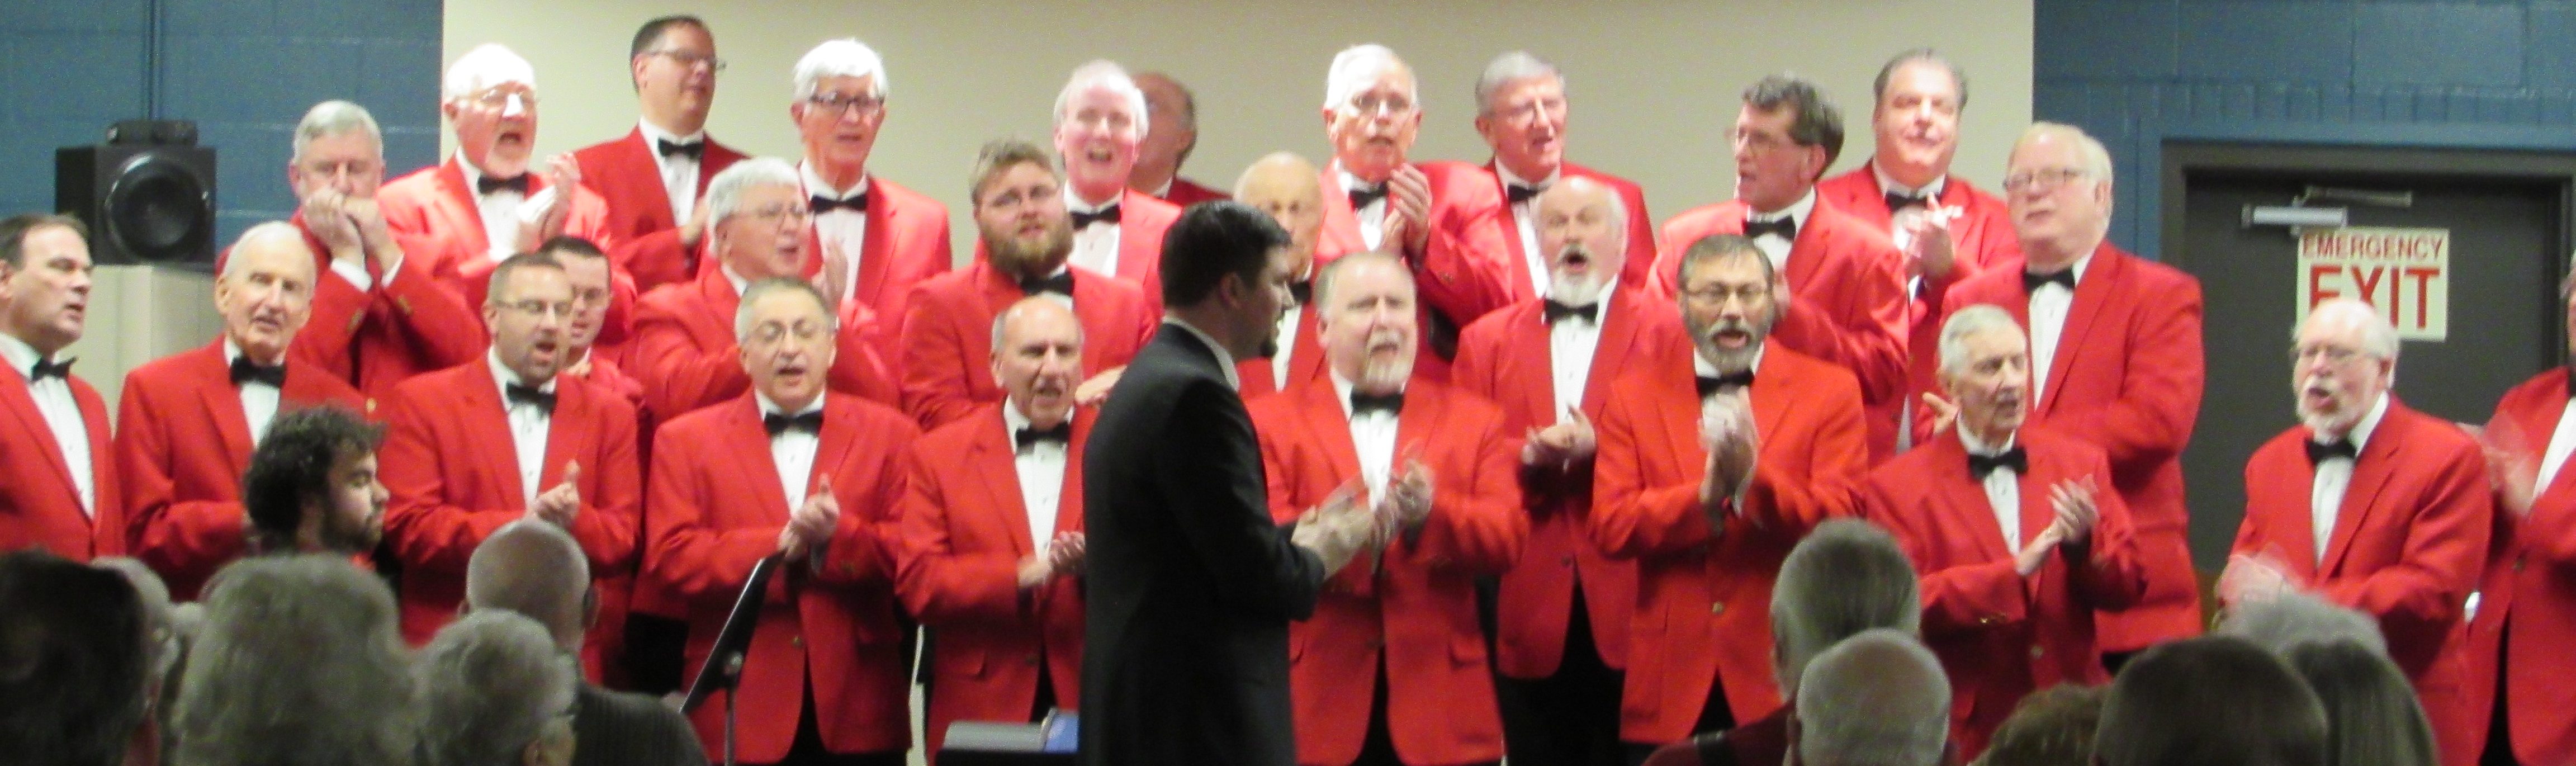 Red Blazer Men's Chorus (11)